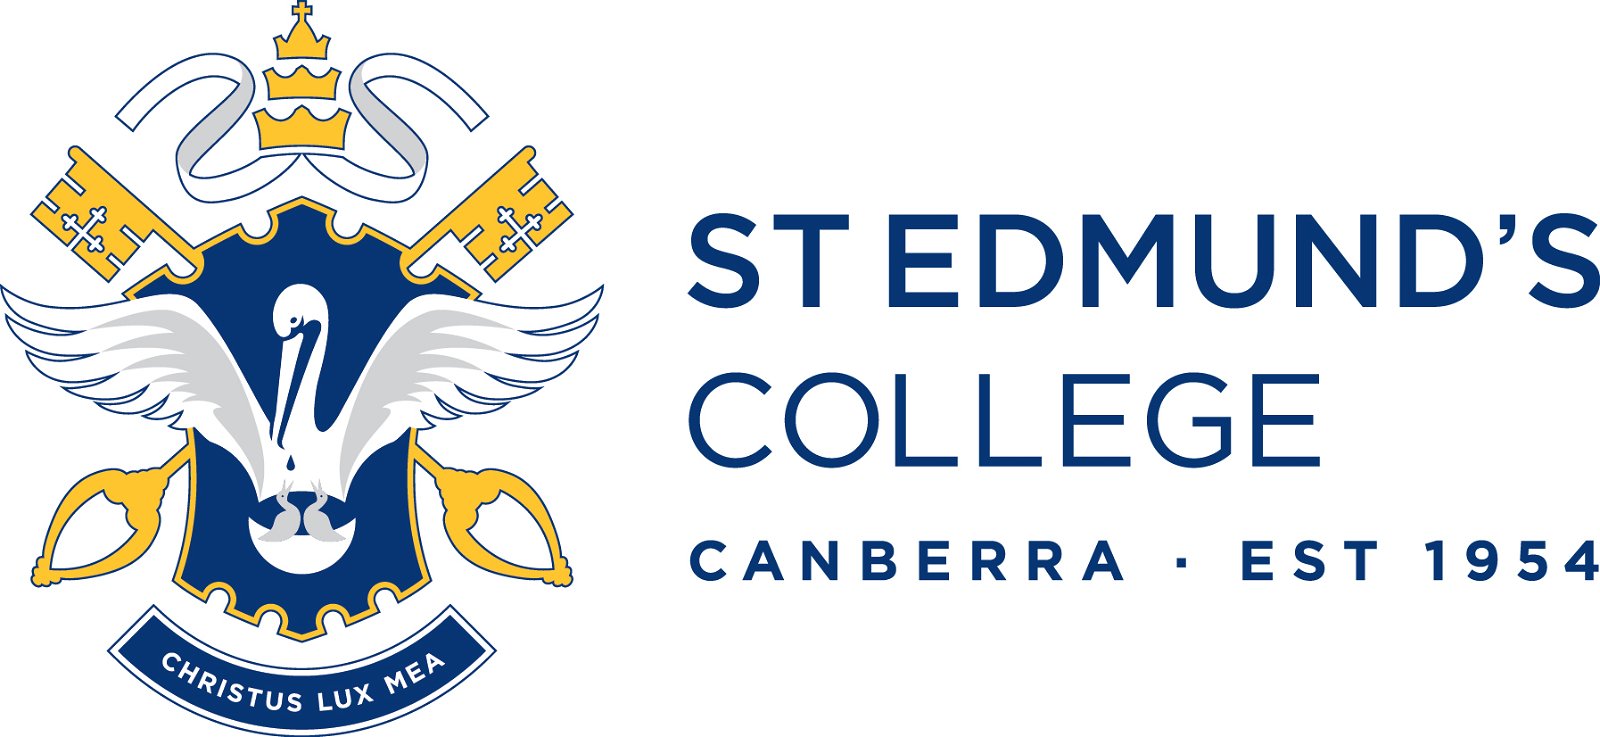 St Edmund's College Canberra - Adelaide Schools